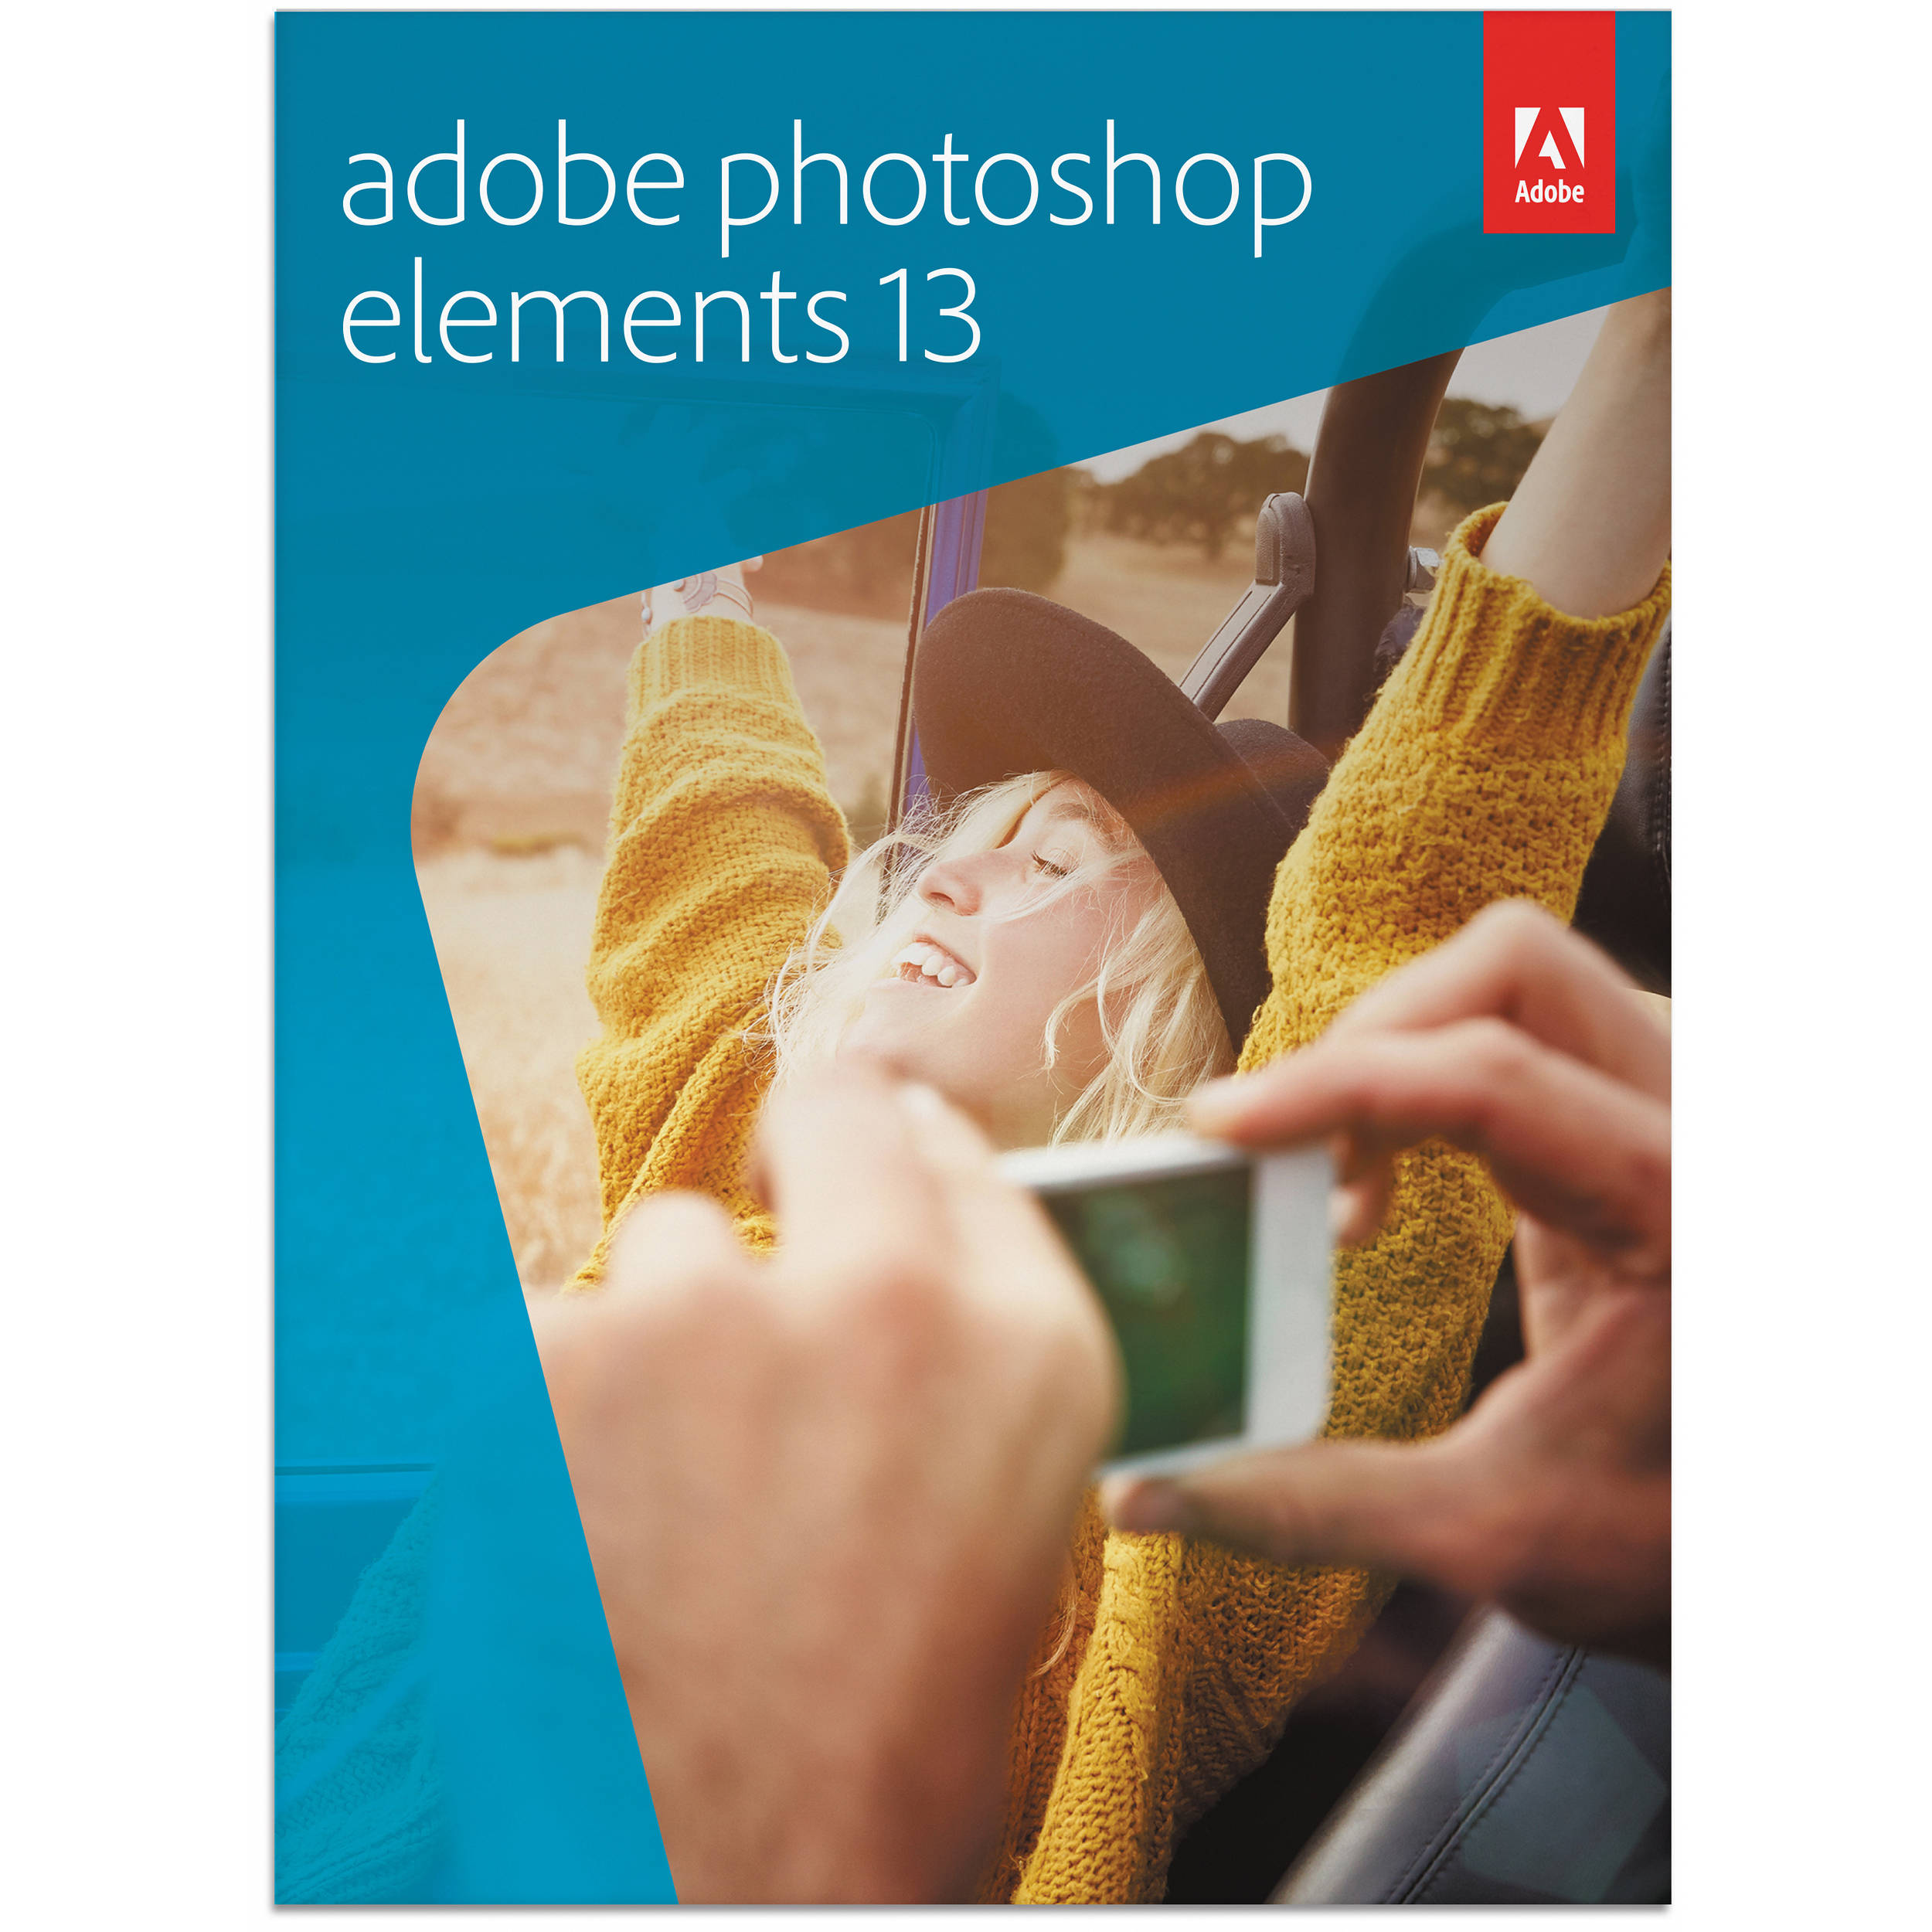 Adobe photoshop elements 10 mac download torrent